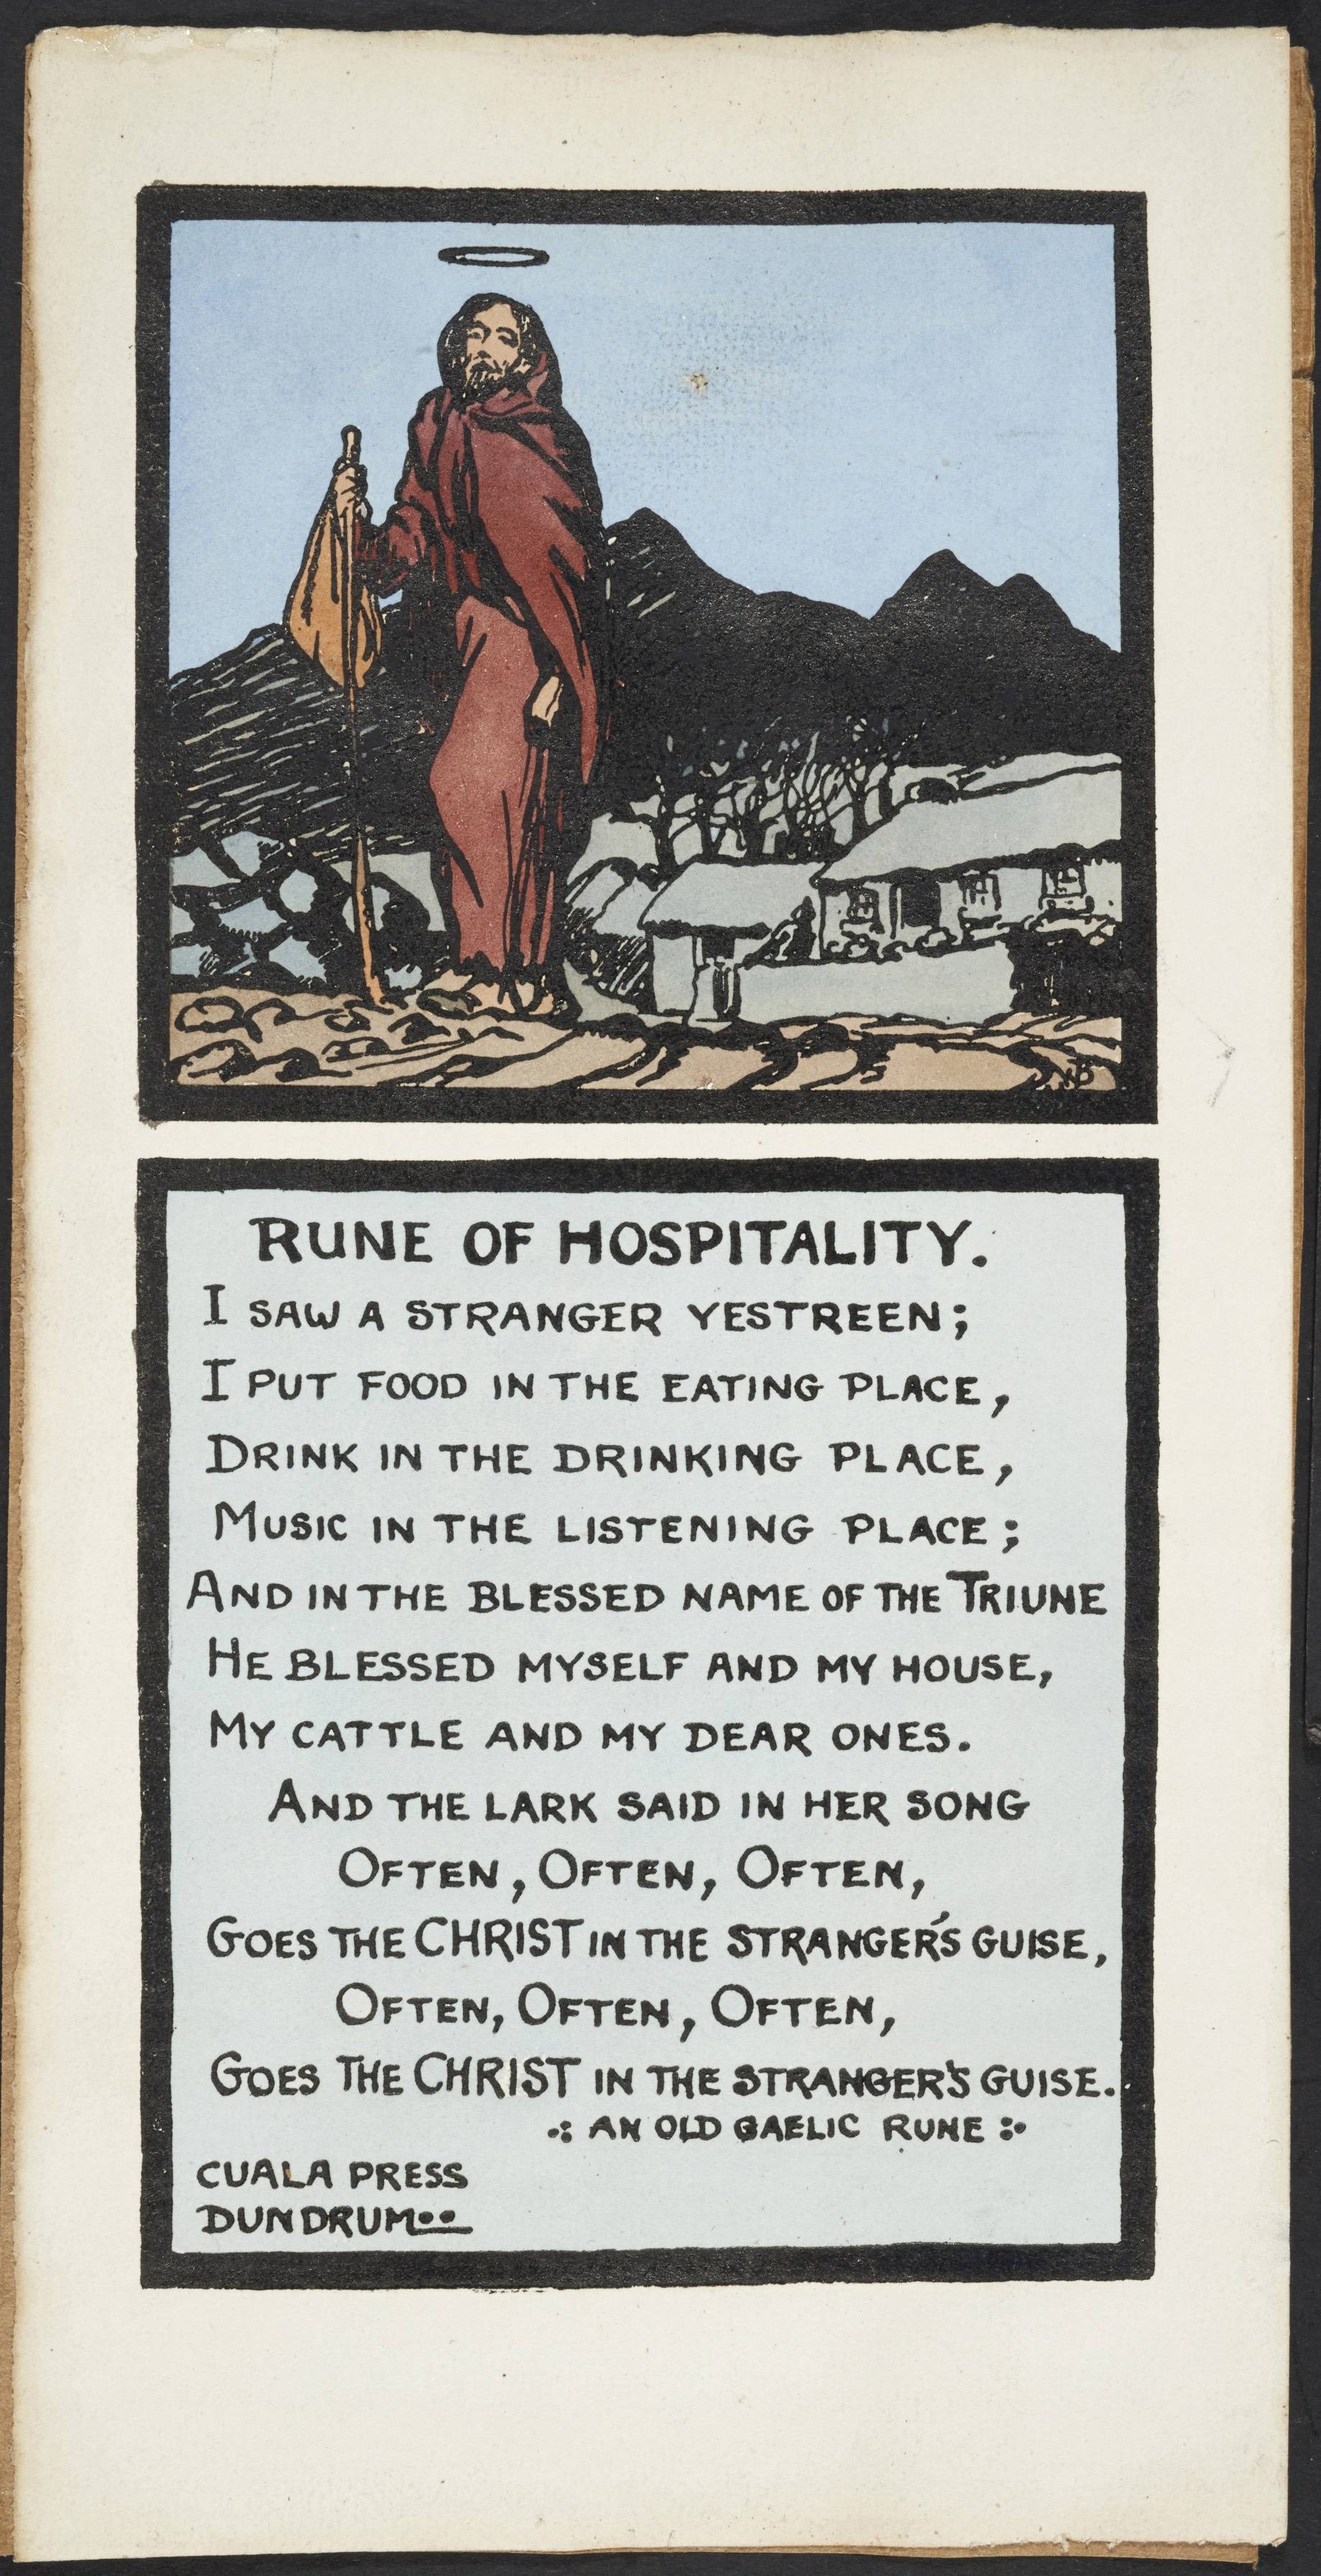 Rune of Hospitality, c. 1925 - 1940. Cuala Press. 